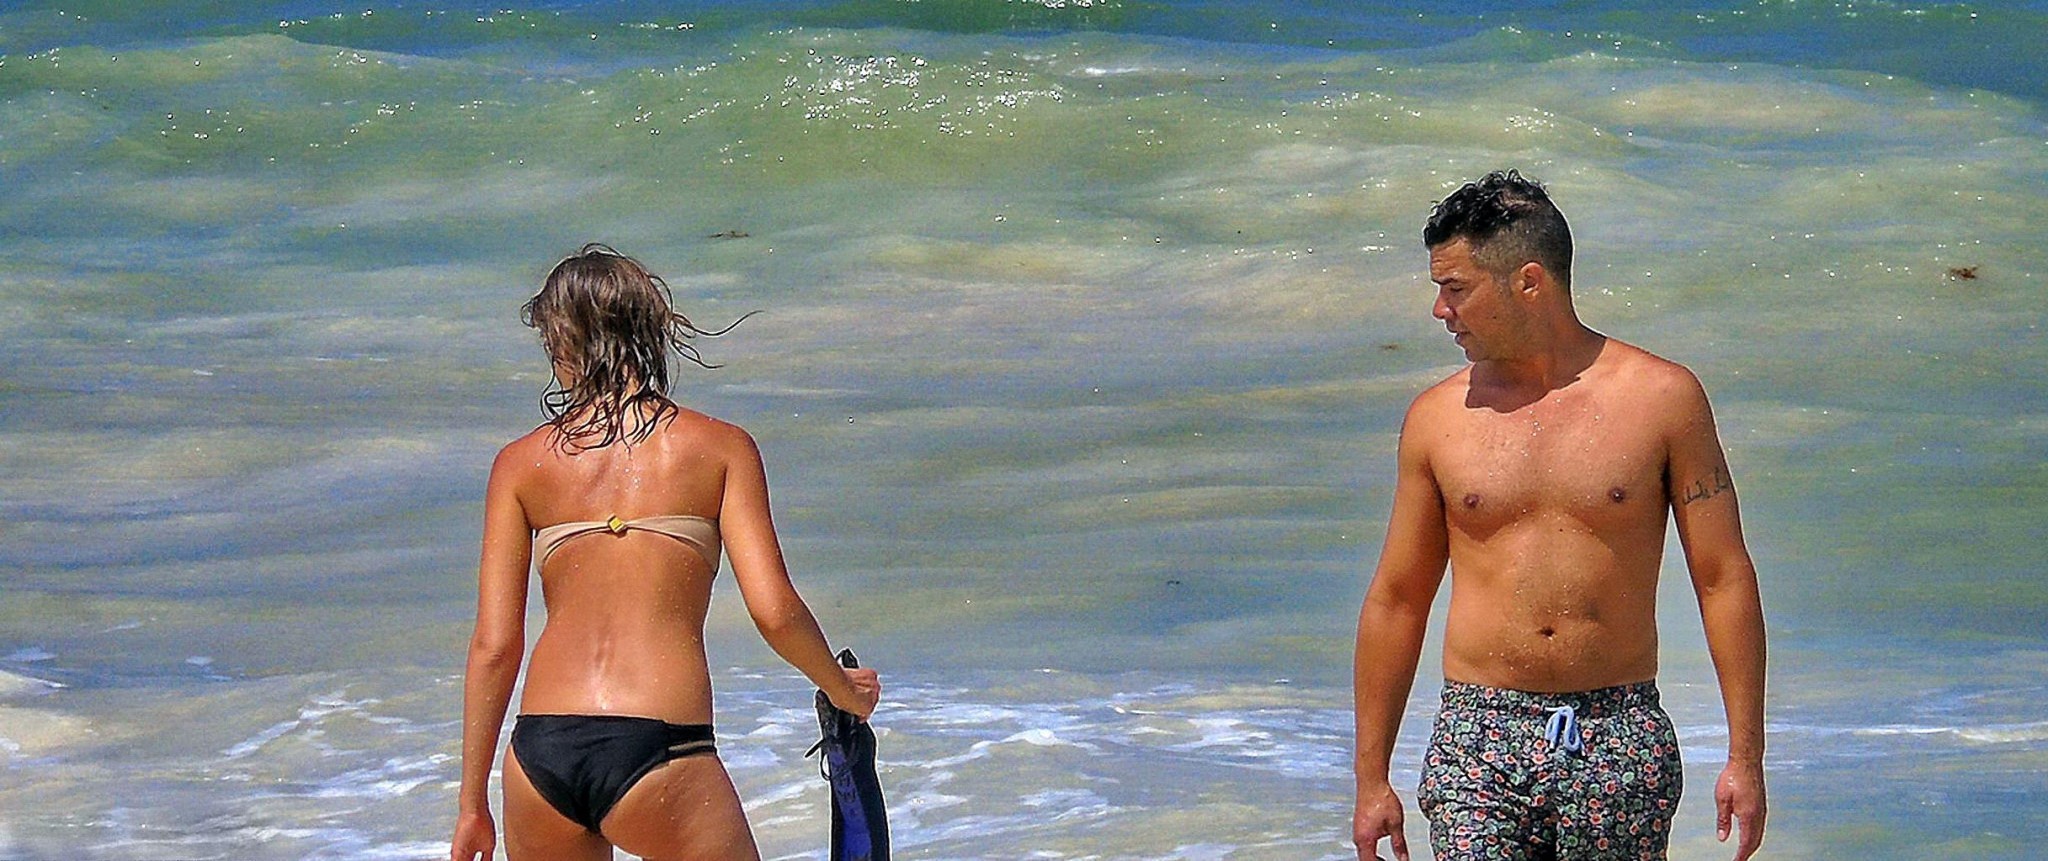 Jessica Alba wearing a strapless bikini on a beach in Mexico #75191652